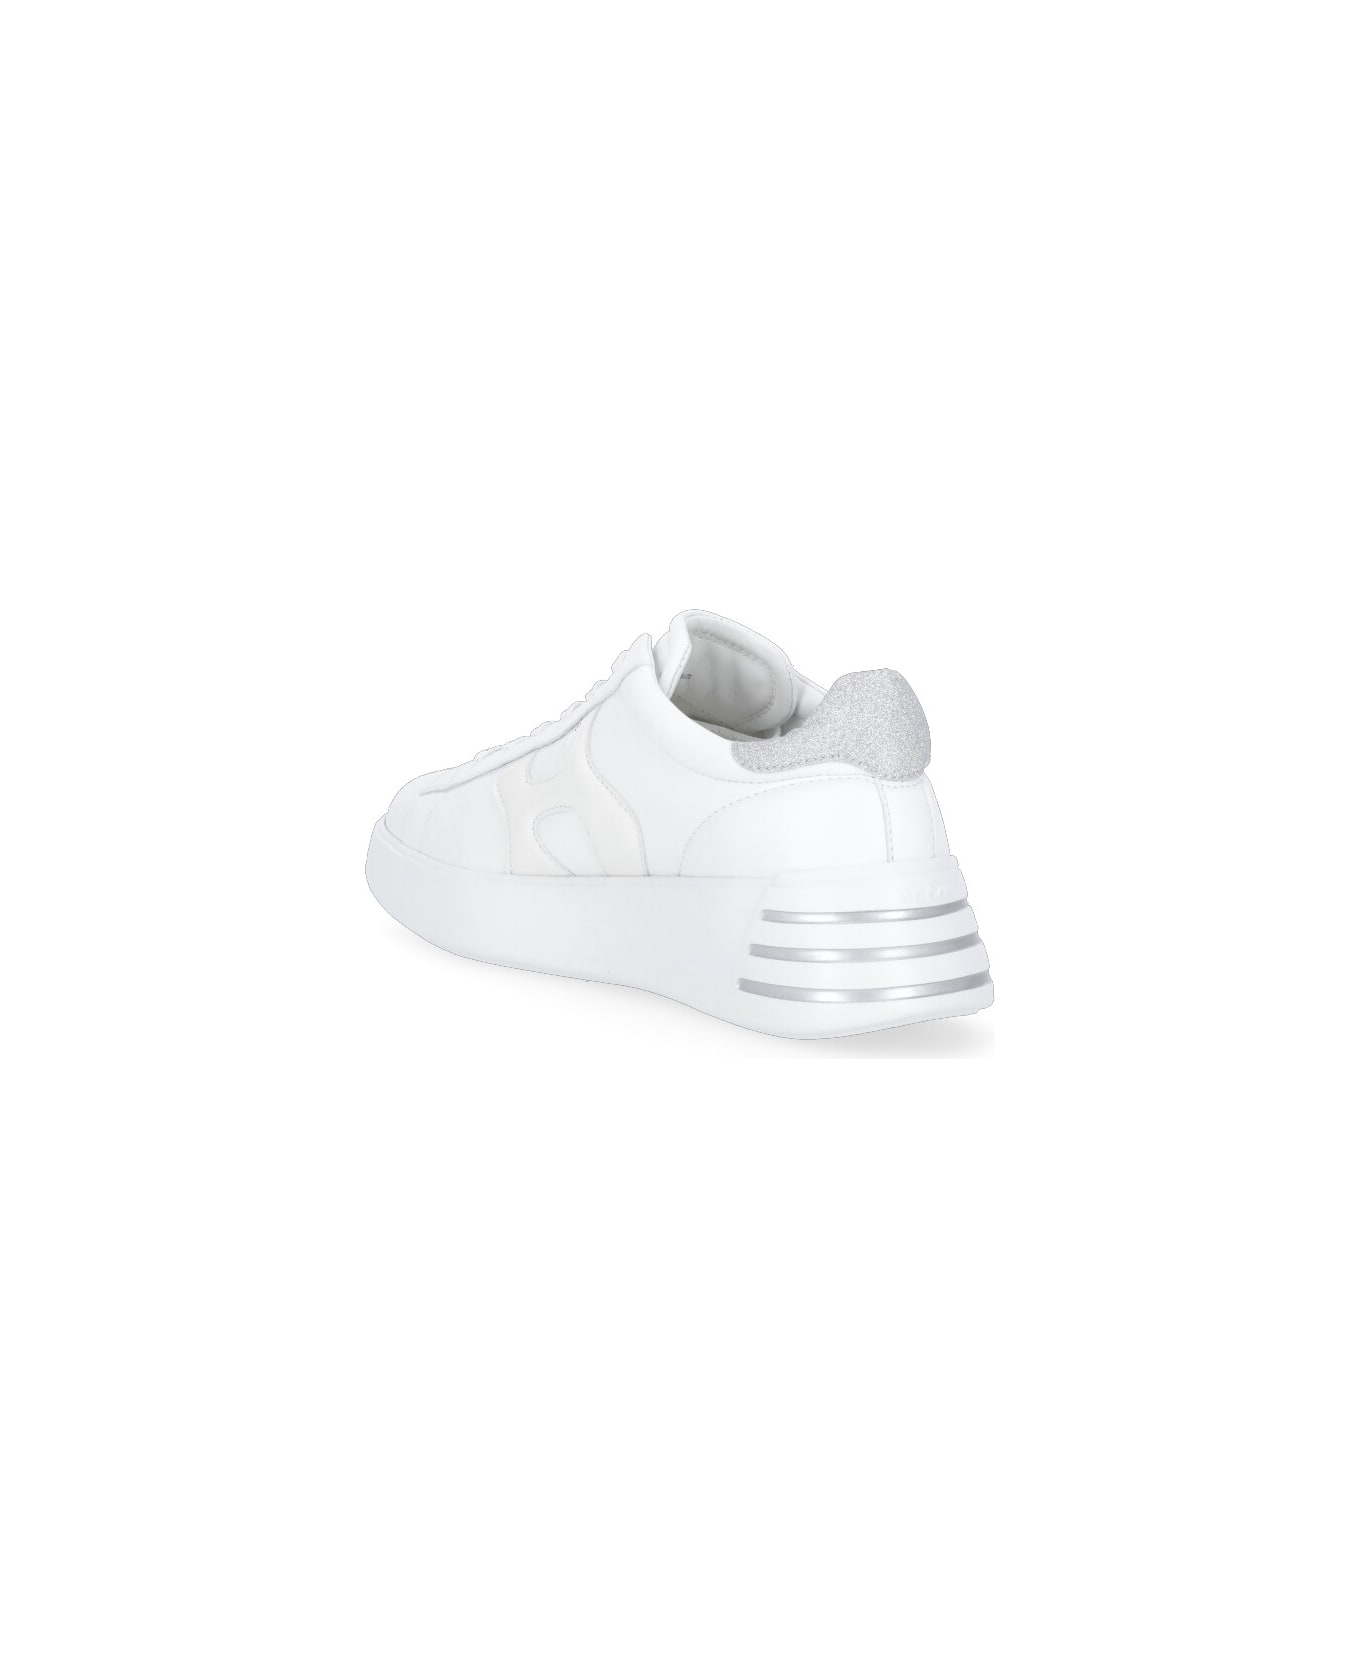 Hogan Rebel Sneakers - White